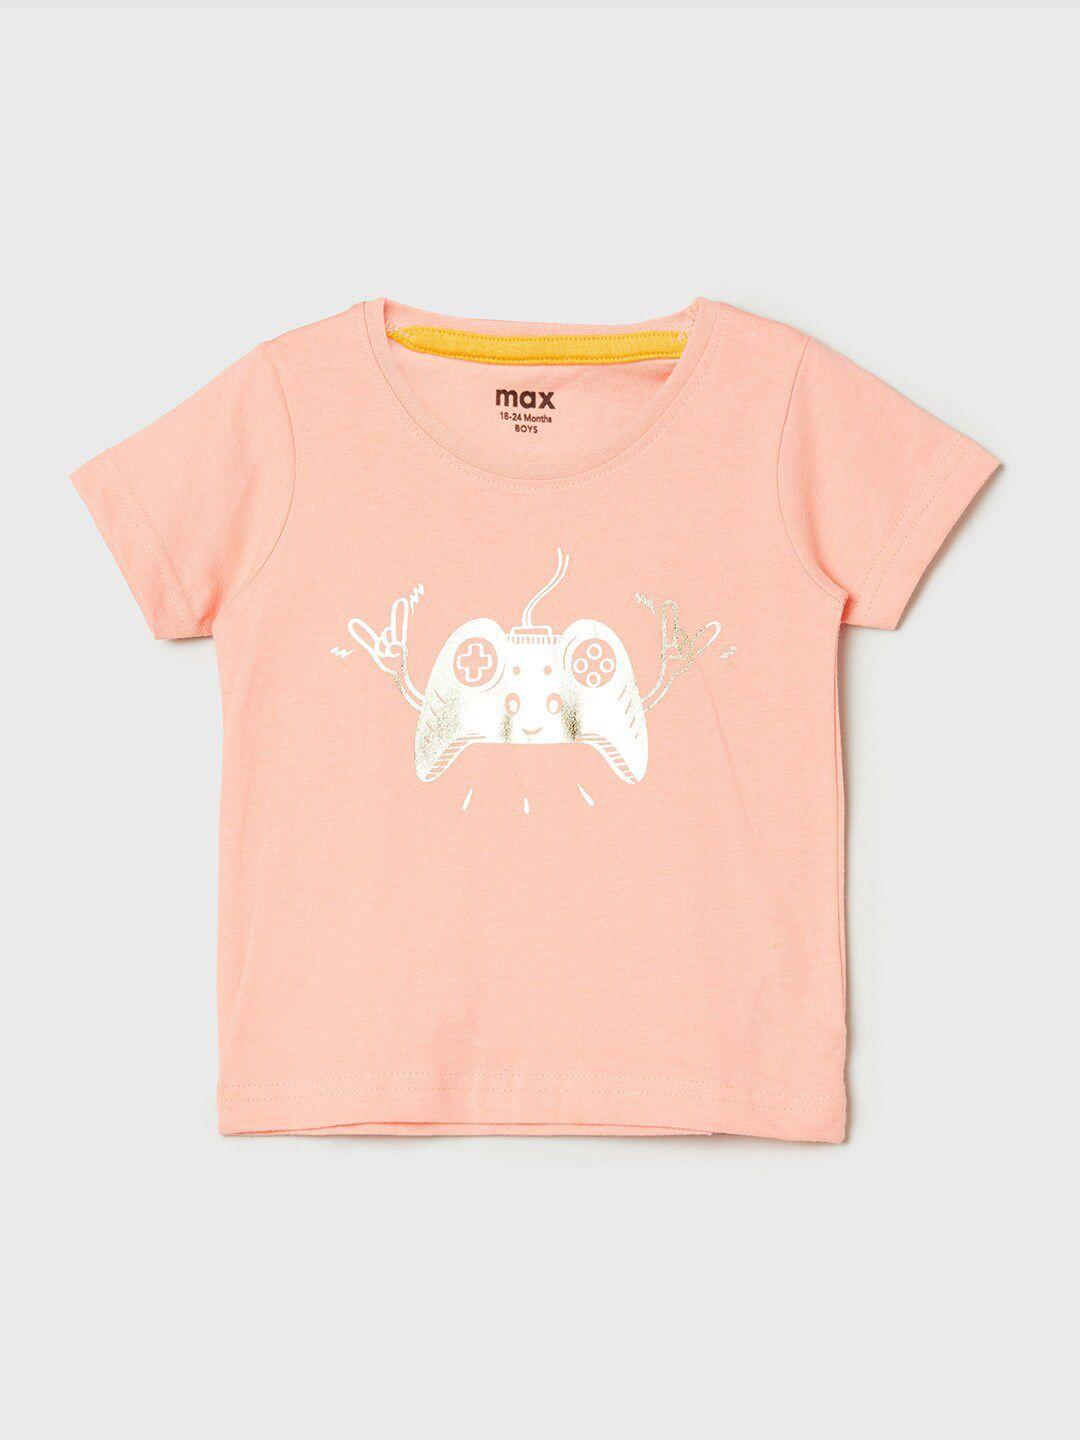 max boys pink printed applique t-shirt